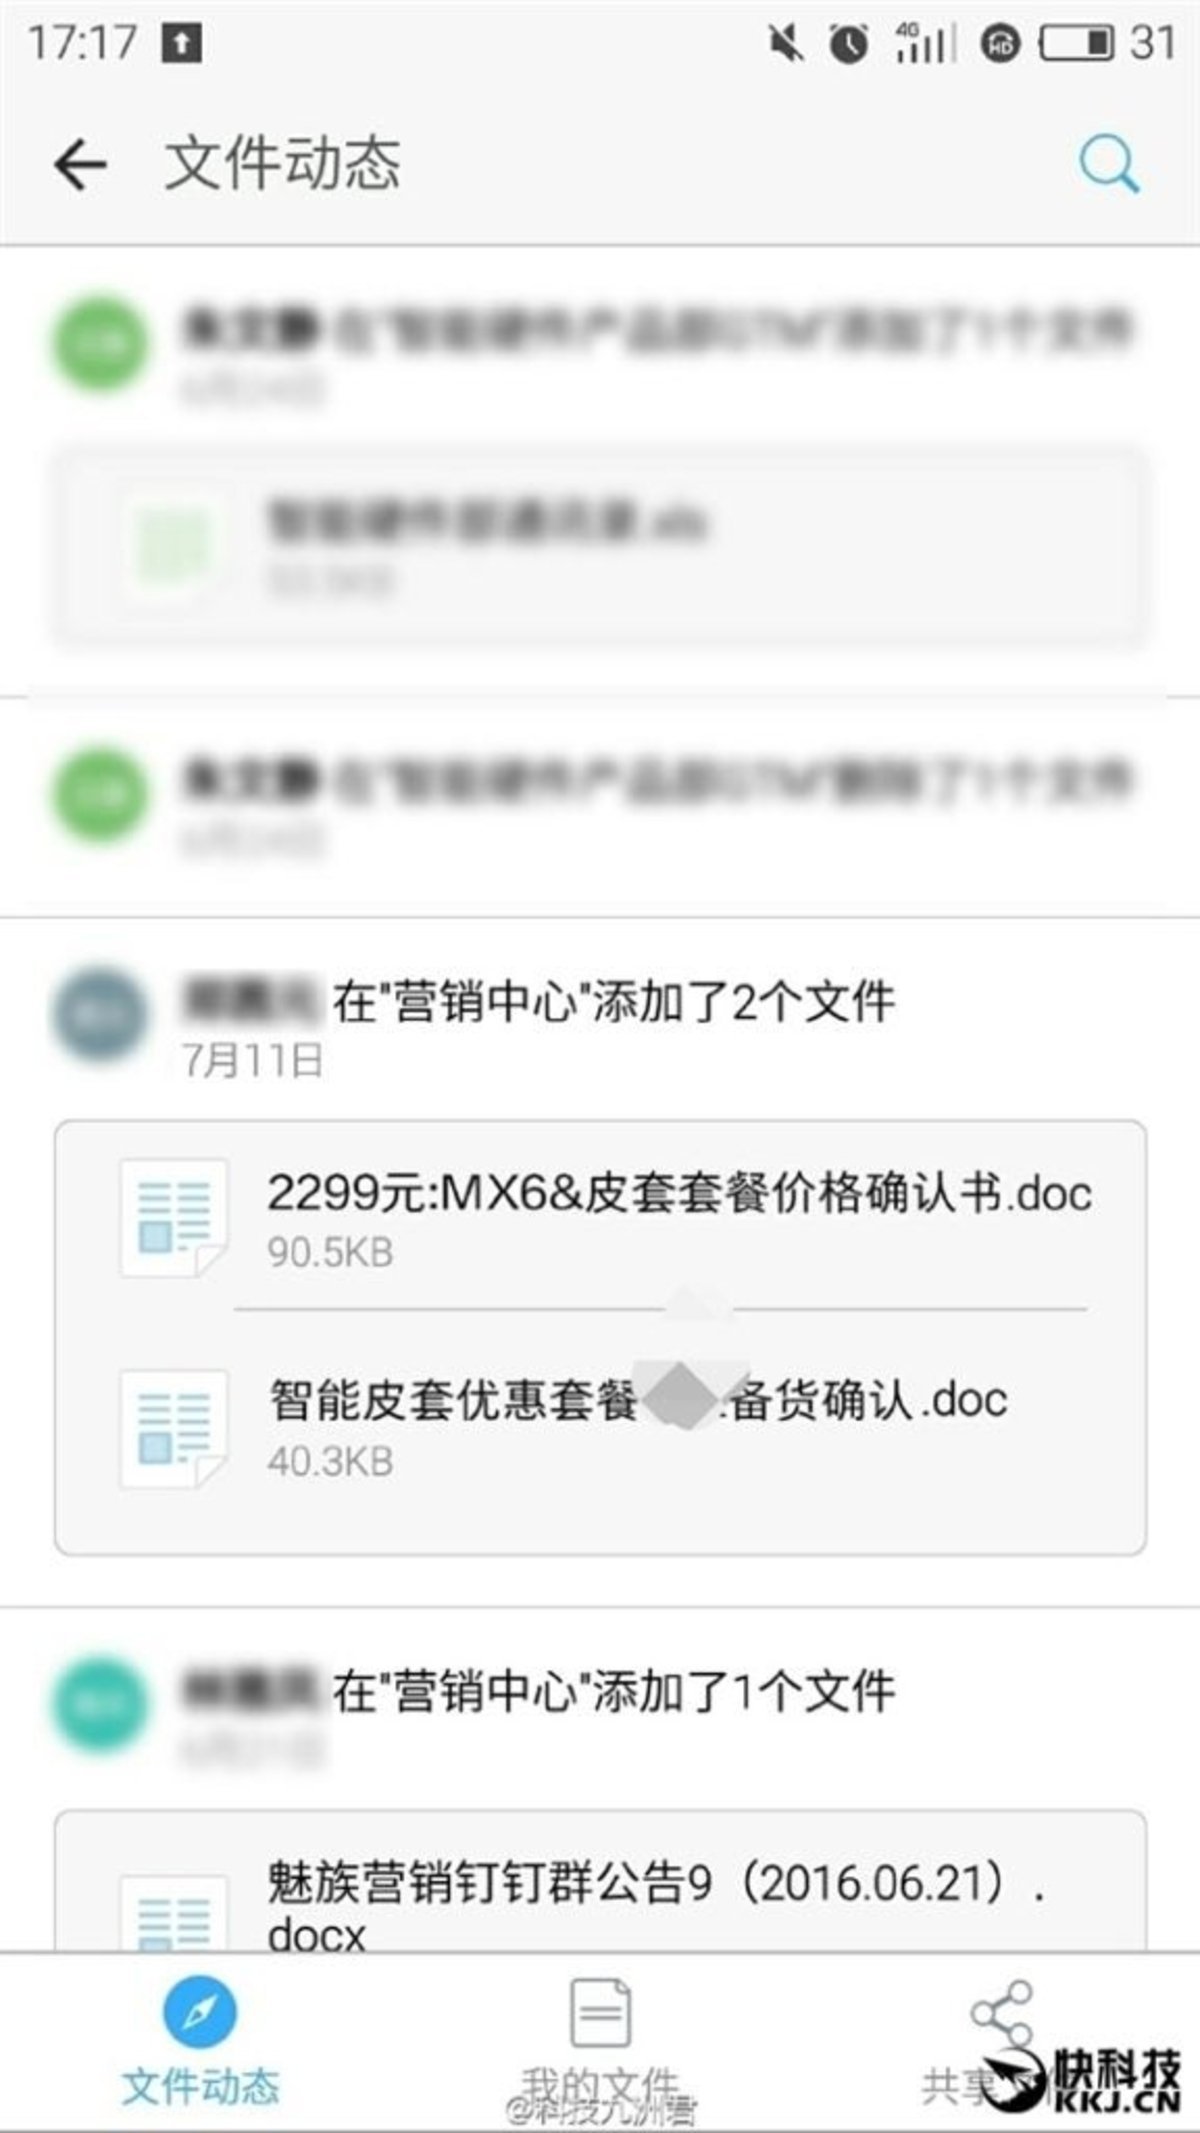 Precio filtrado del Meizu MX6